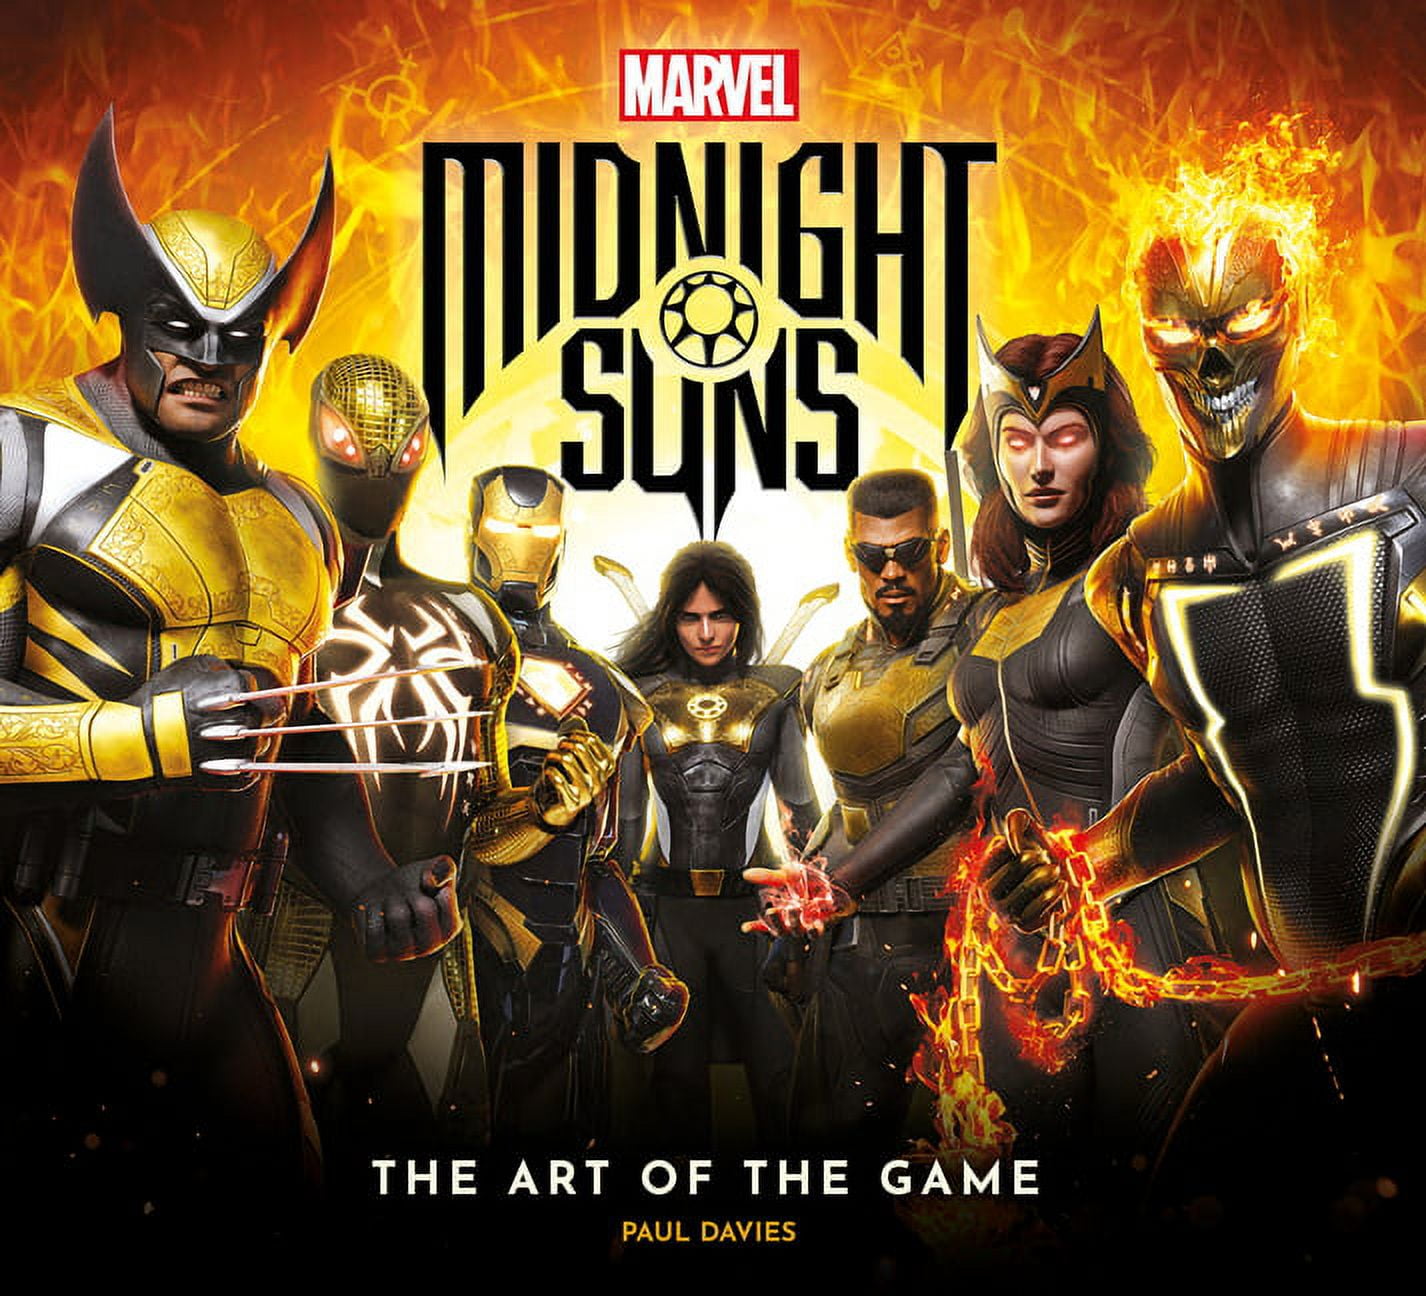 Marvel's Midnight Suns tips to lead a supernatural superhero team